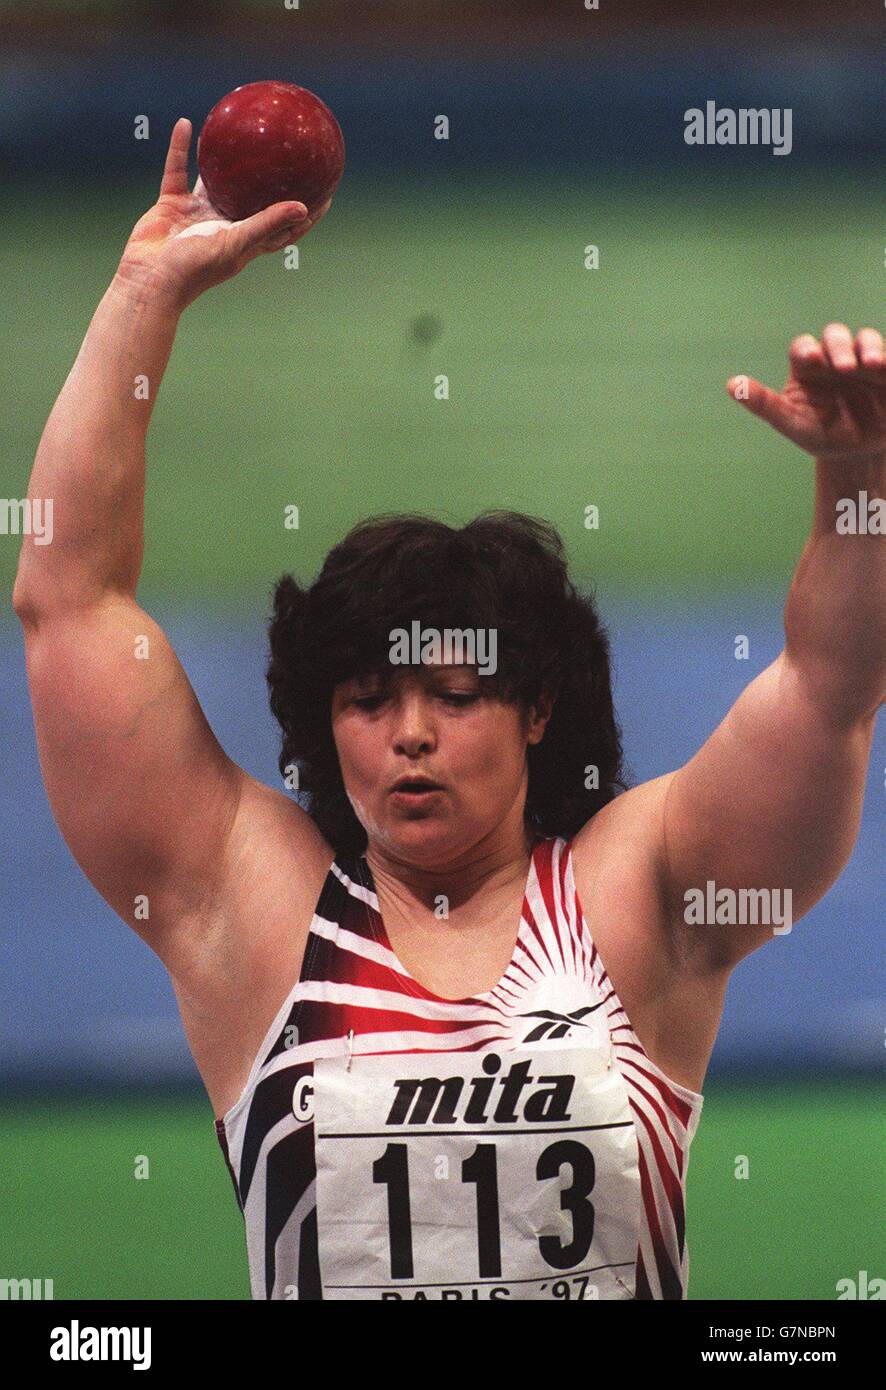 Athletics - 6th IAAF World Indoor Championship. Judy Oakes, Great Britain - Shot Put Stock Photo